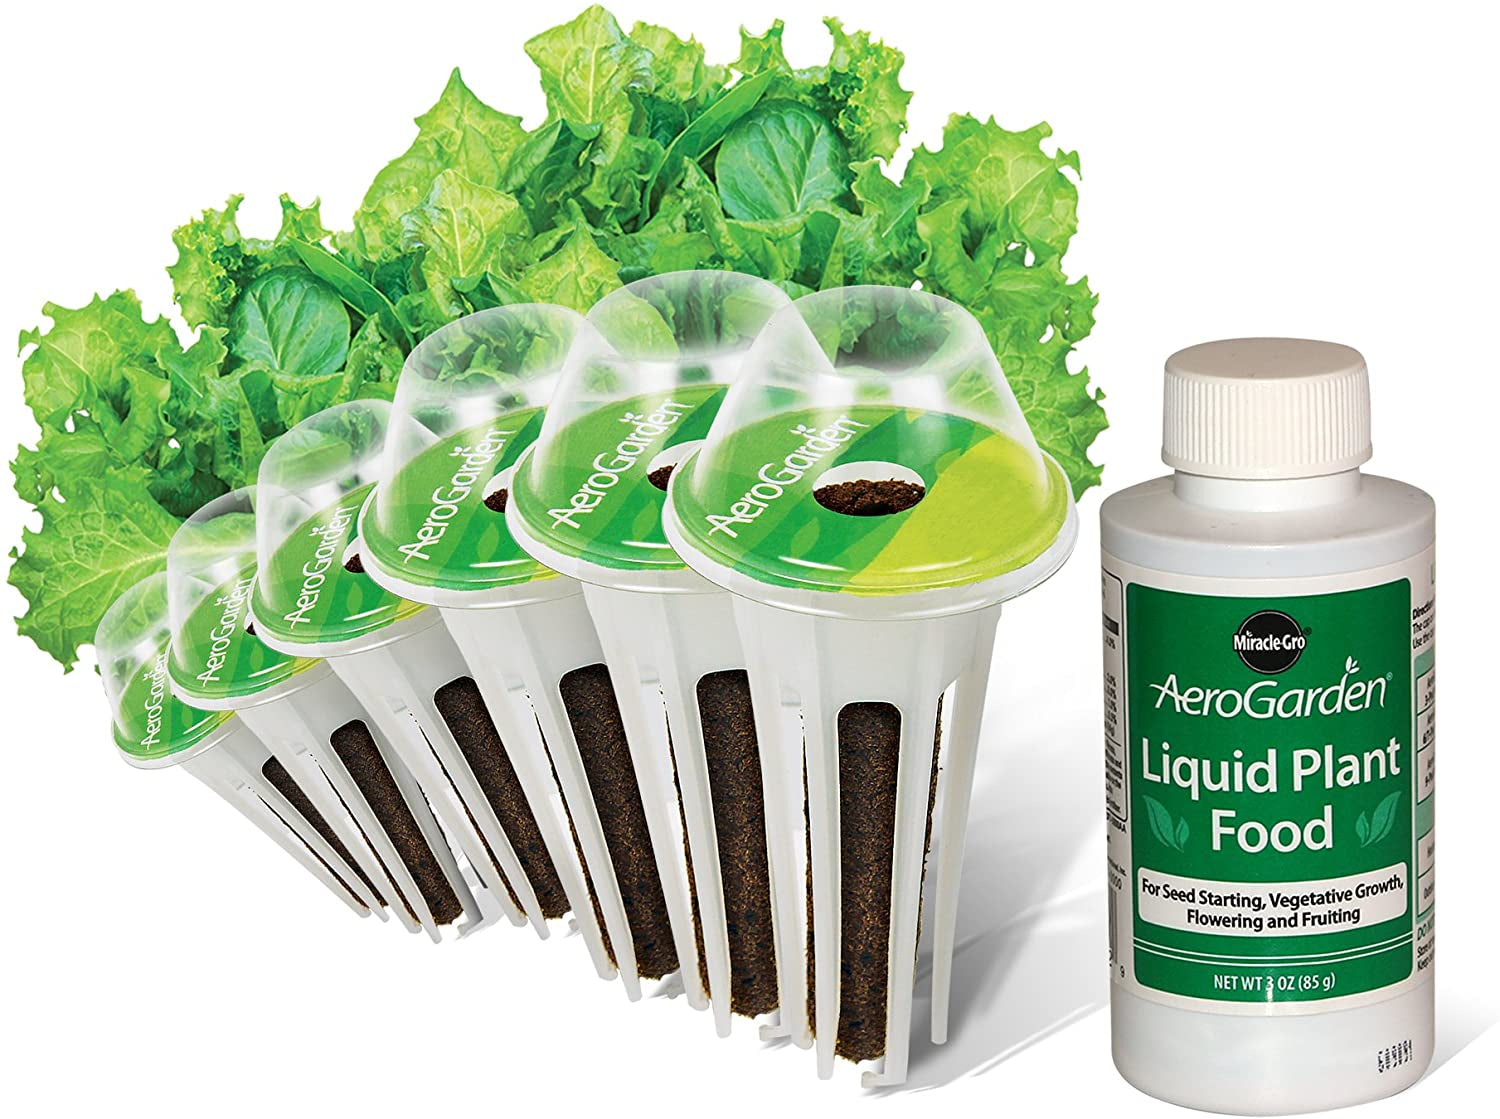  Heirloom Salad Greens Mix Seed Pod Kit 